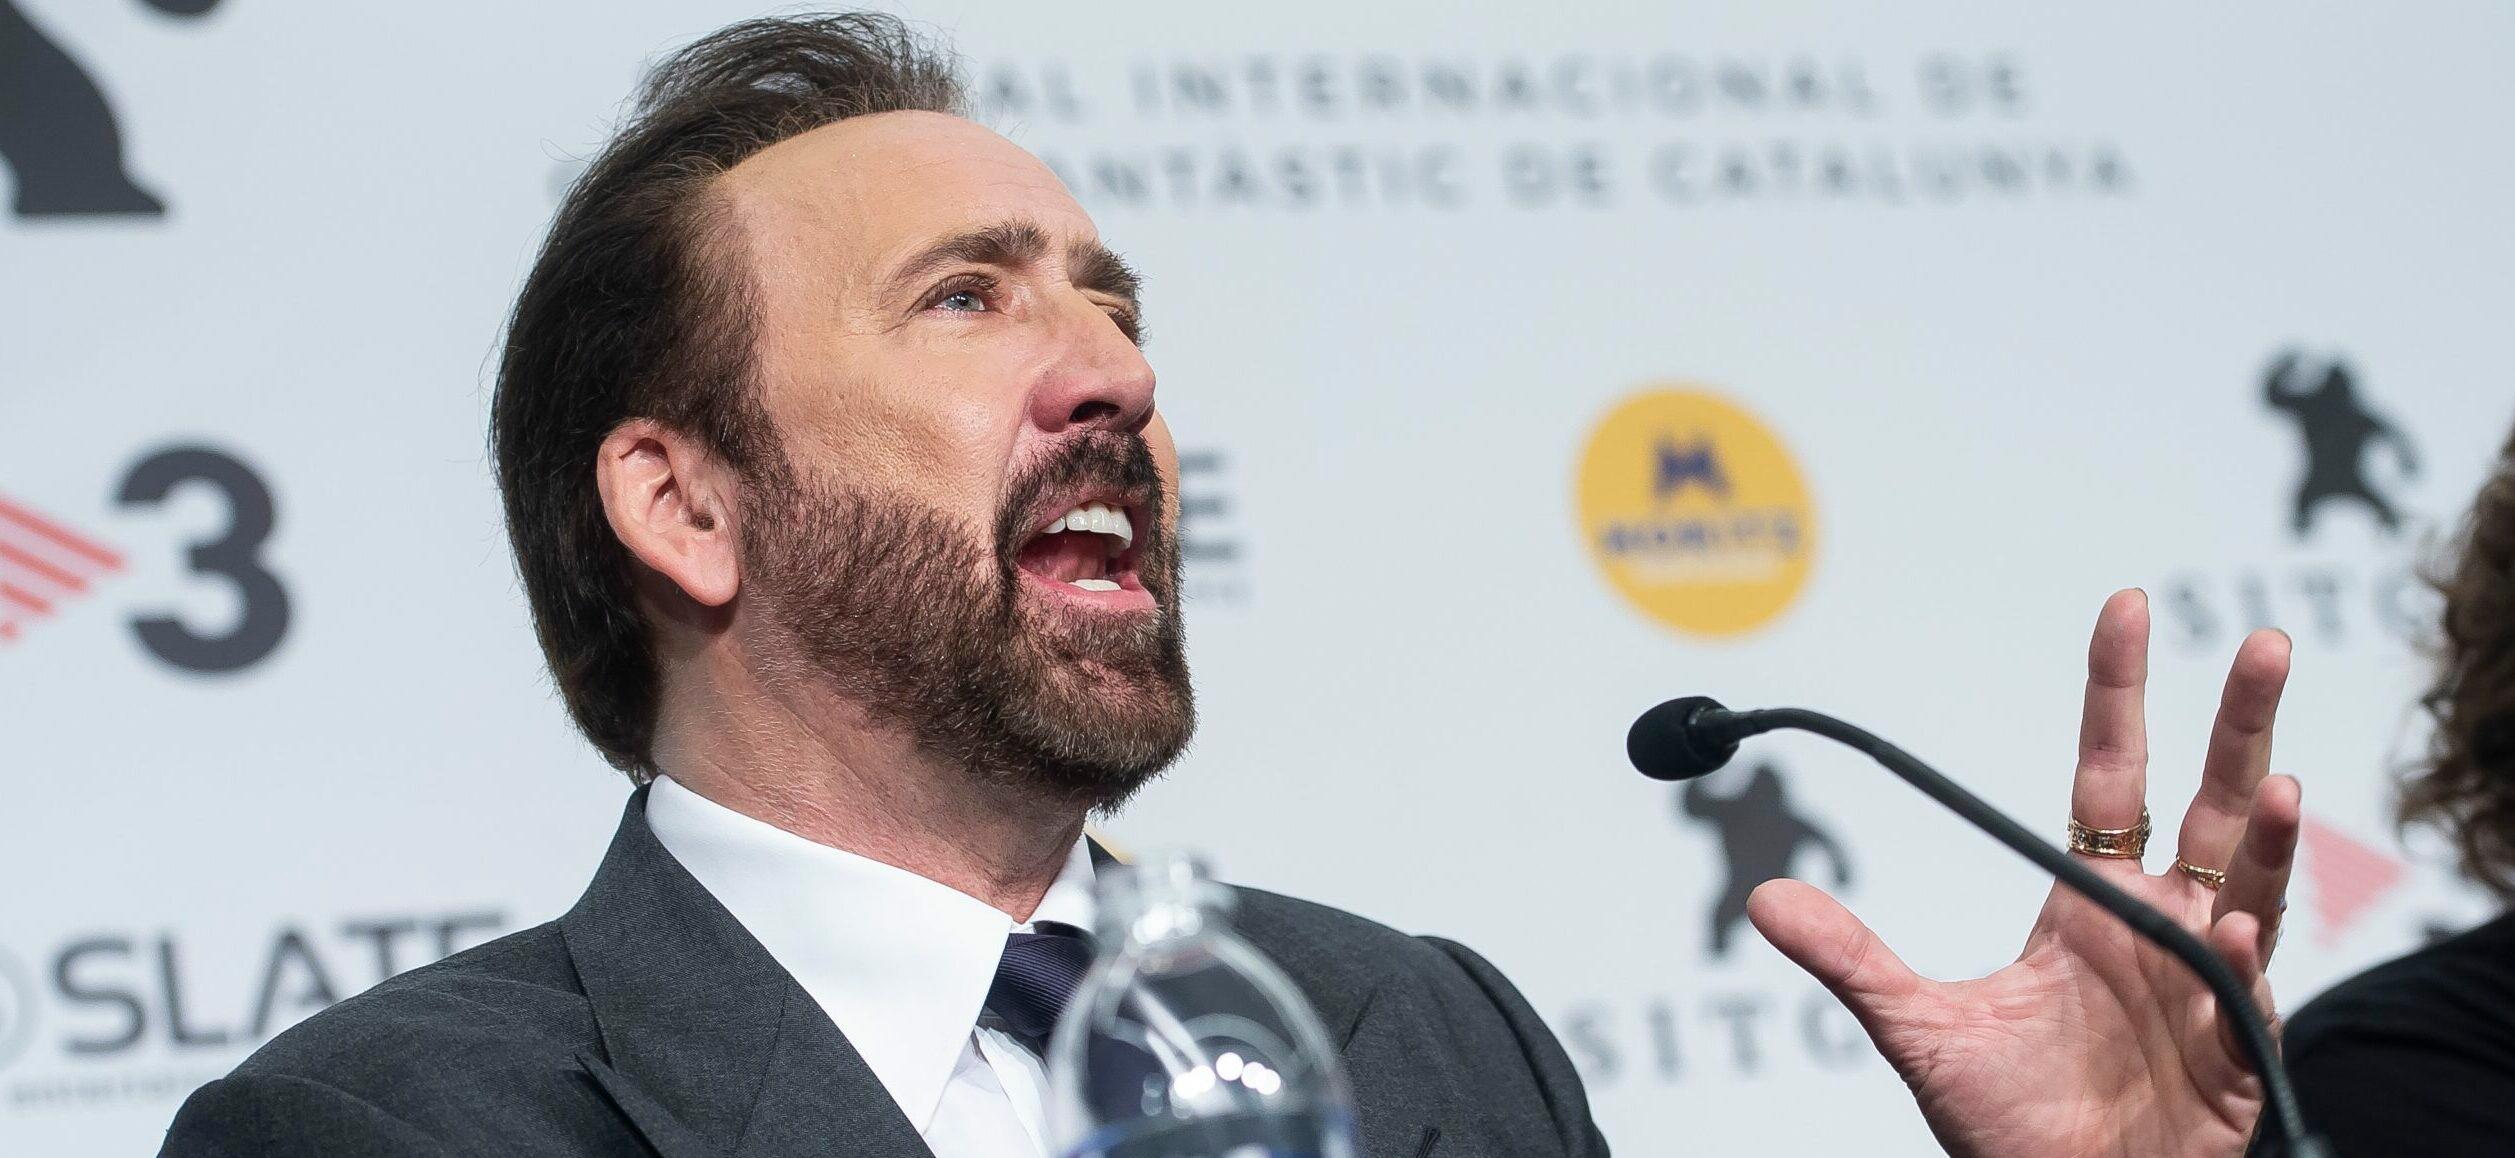 Nicolas Cage Talks Playing Nicolas Cage: ‘That’s Not Me’